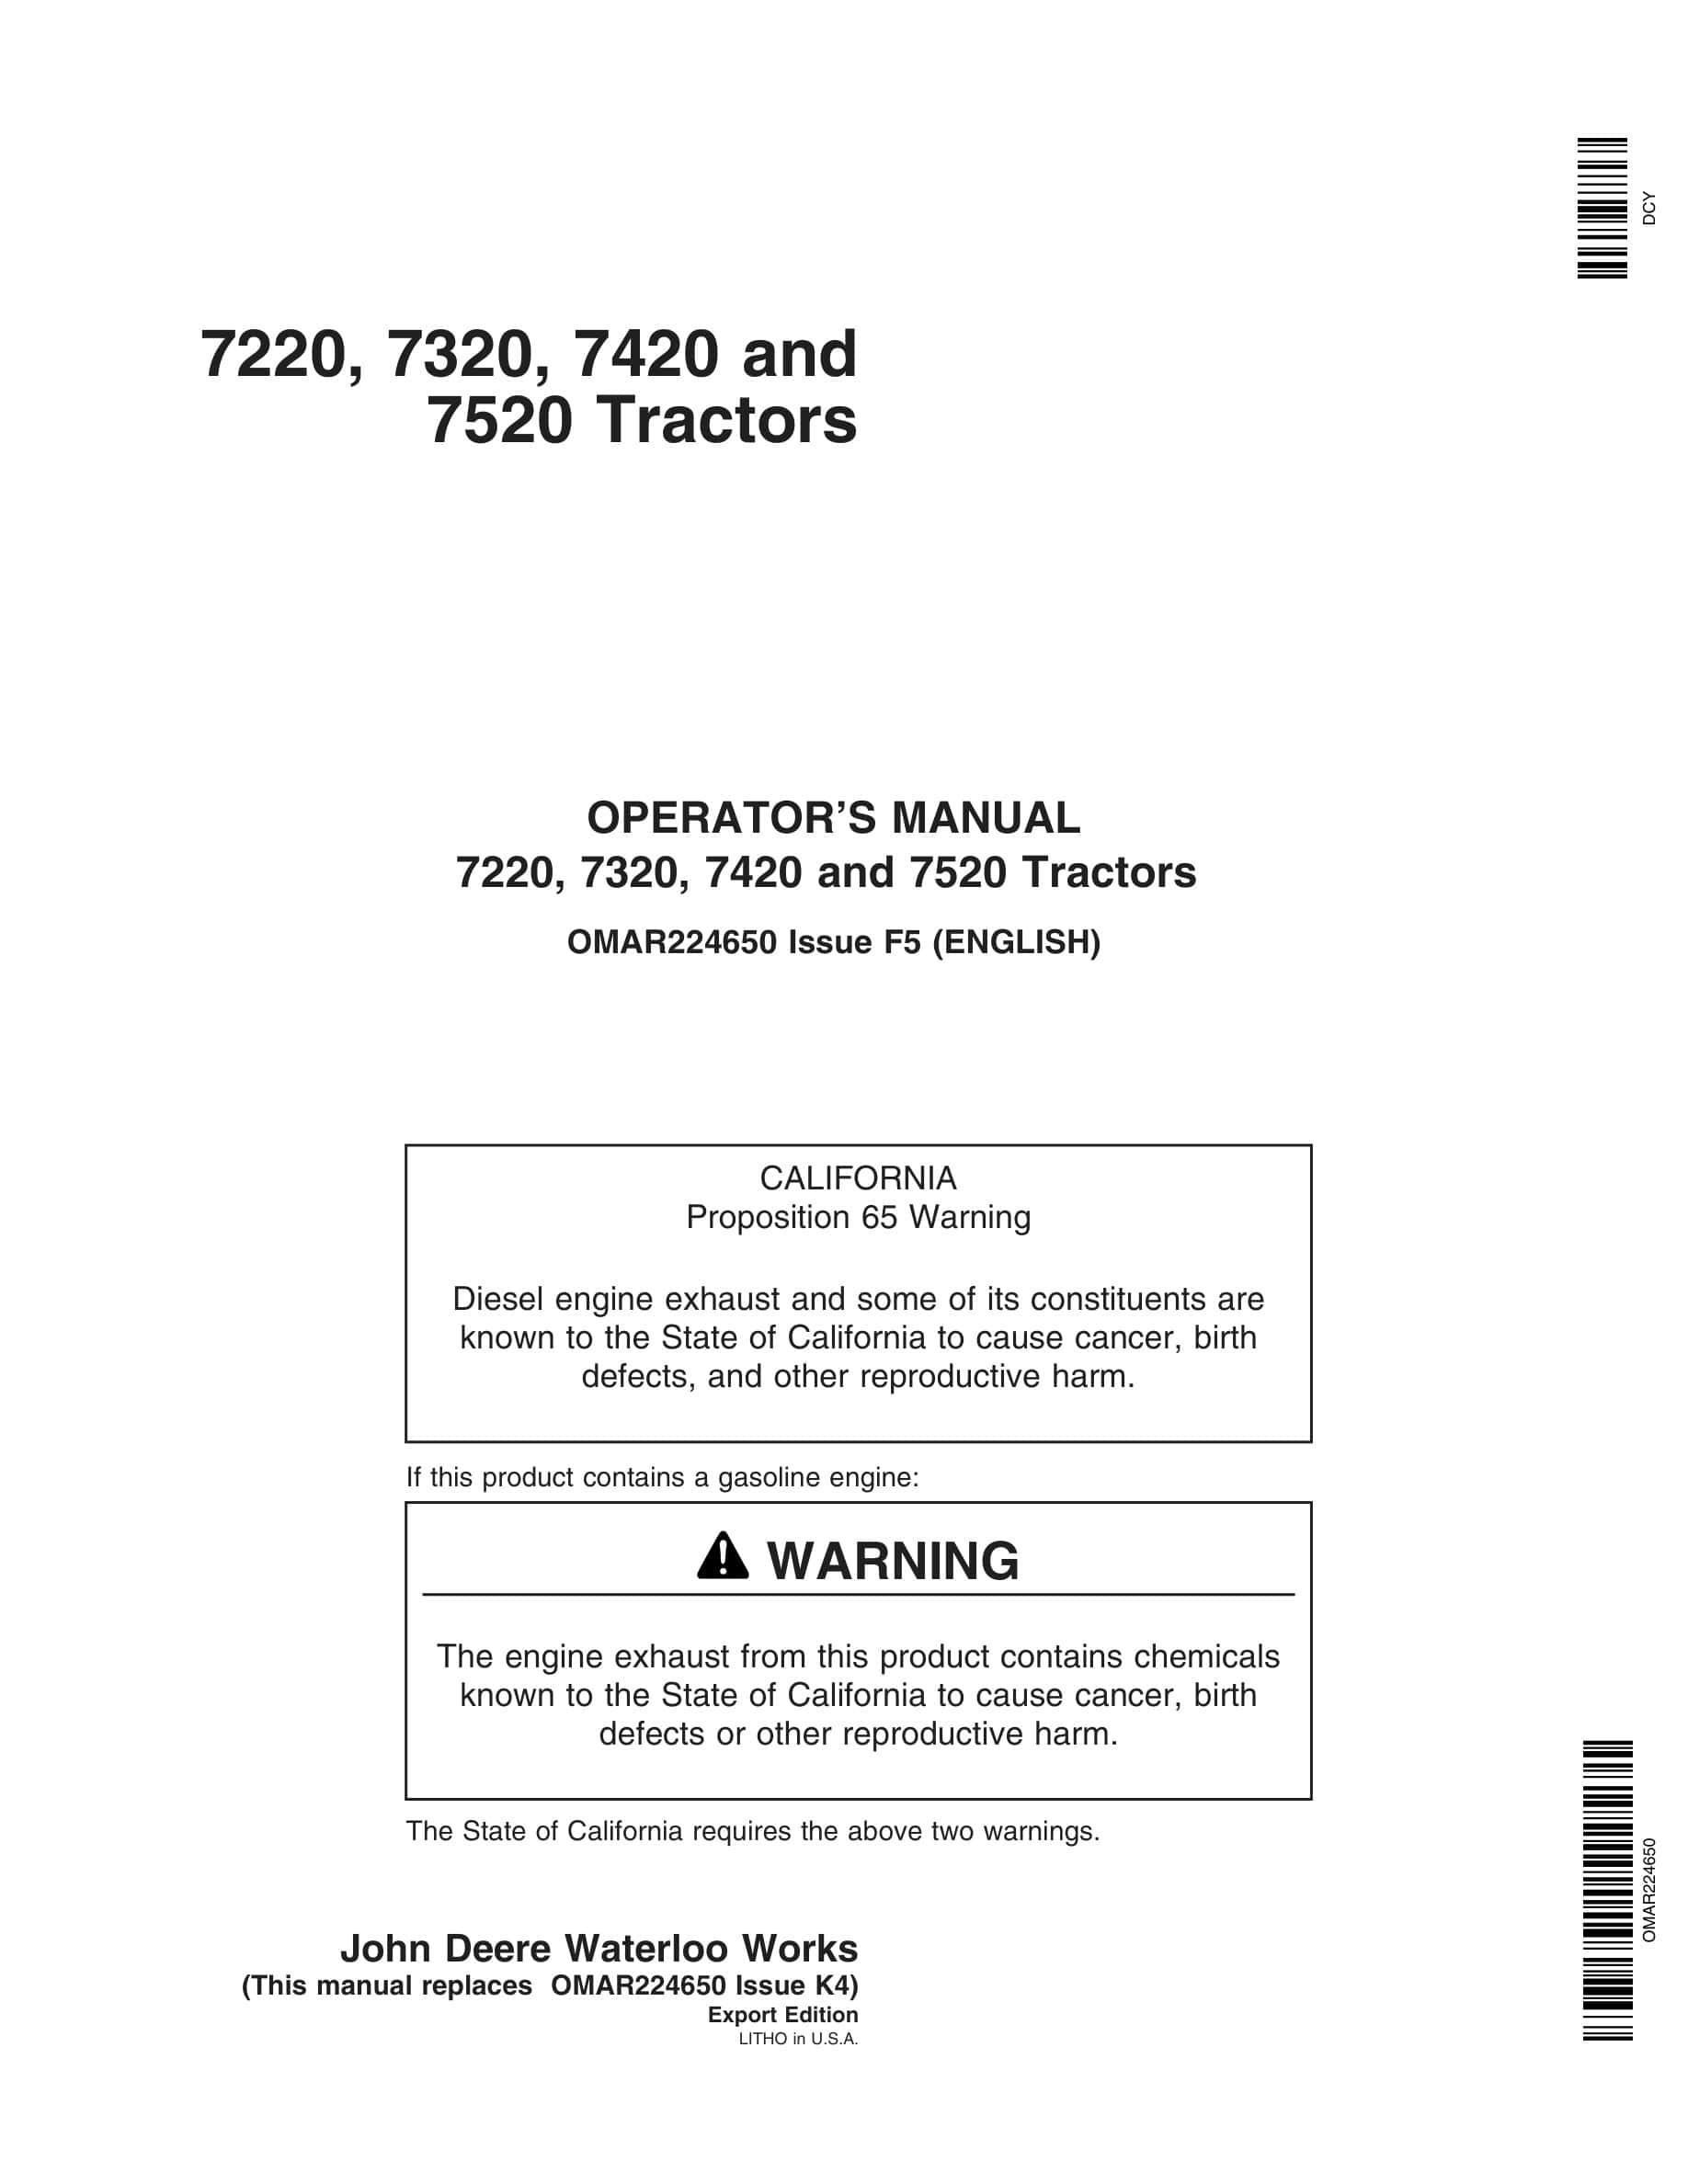 John Deere 7220, 7320, 7420 And 7520 Tractors Operator Manuals OMAR224650-1